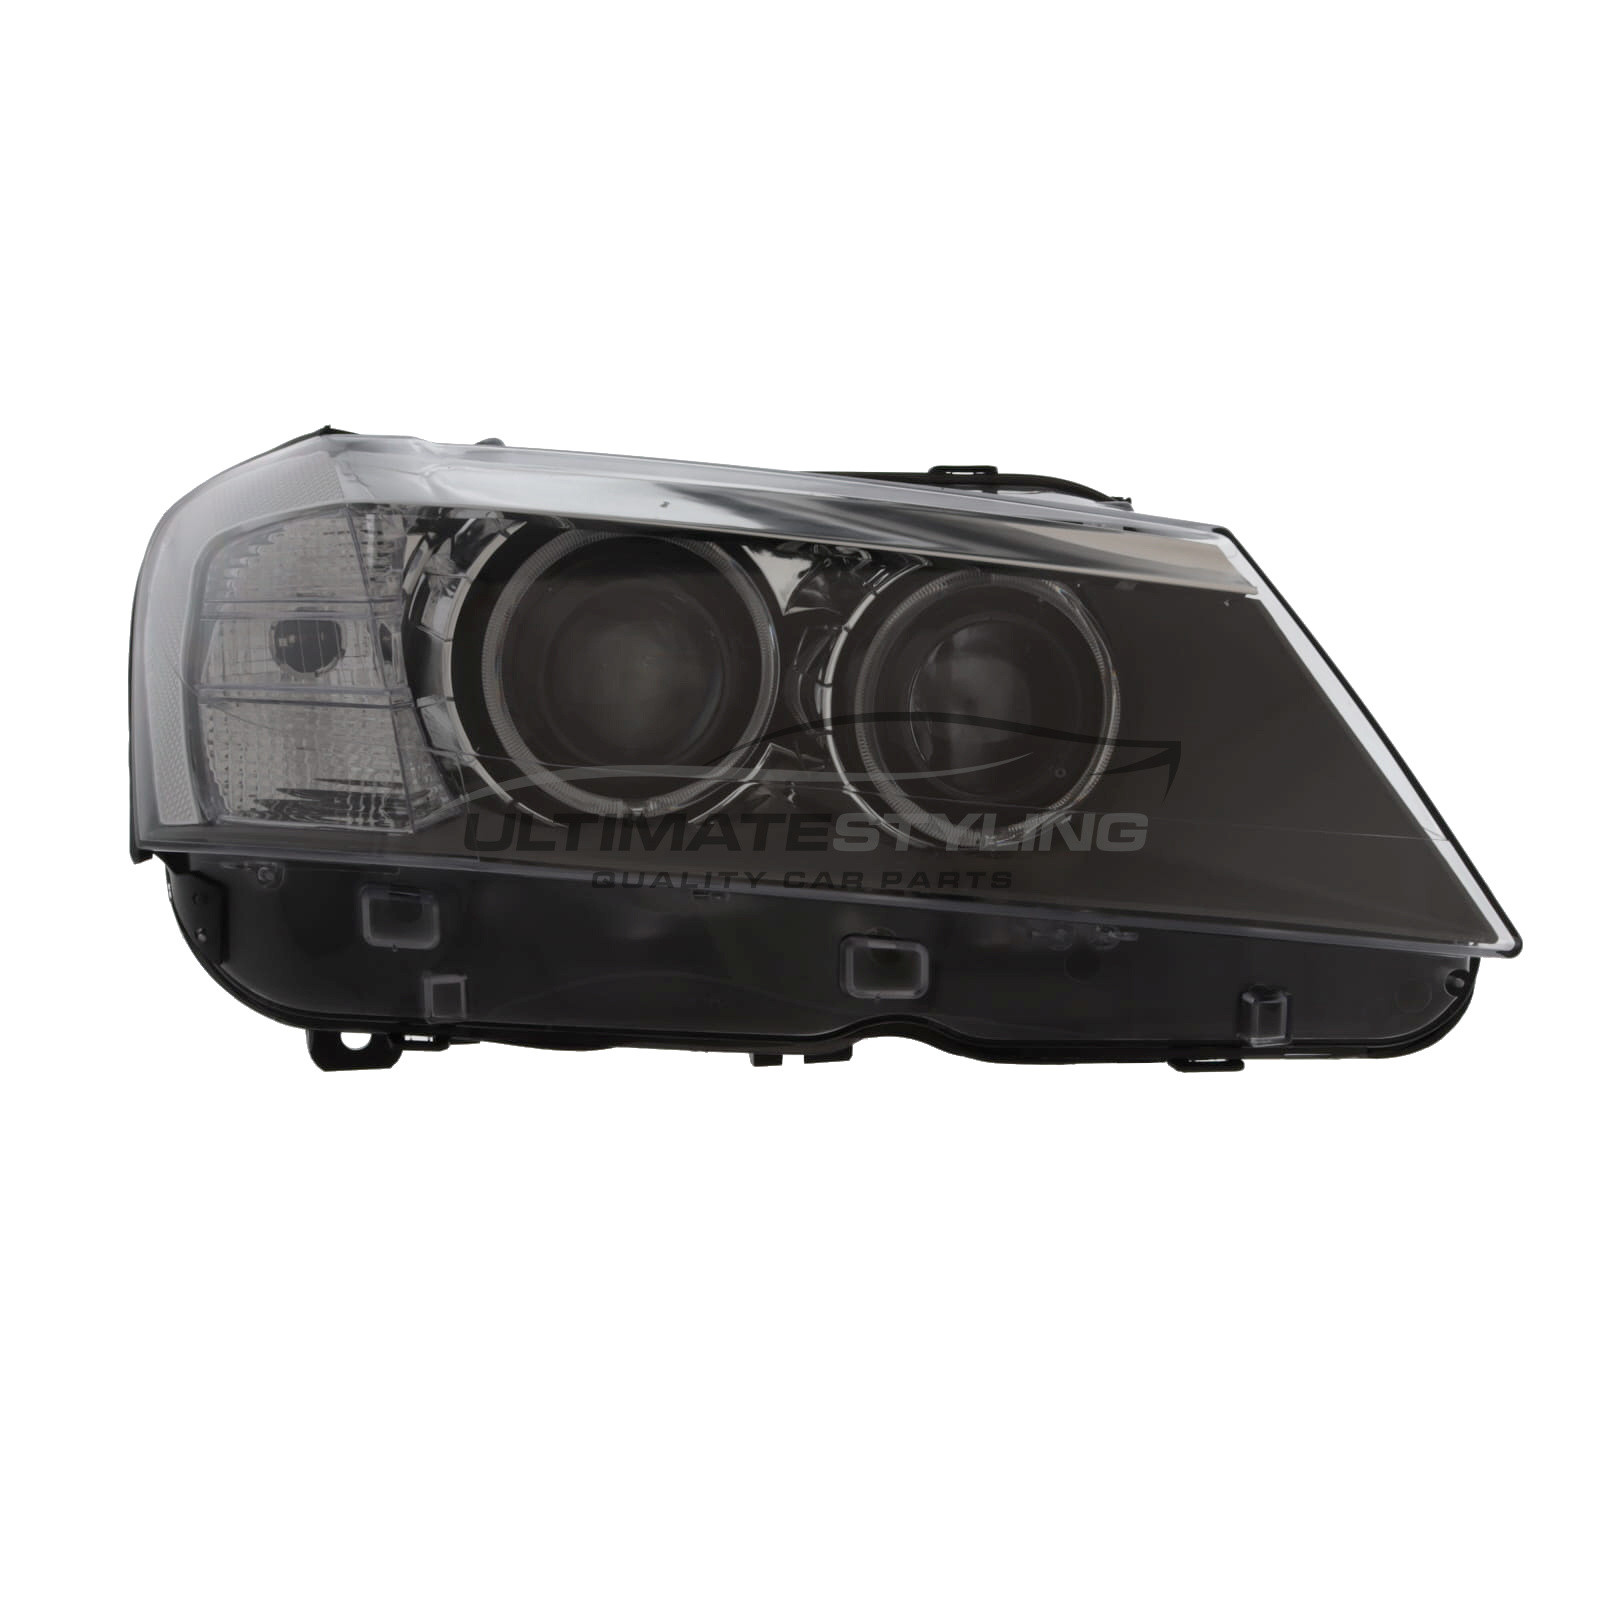 BMW X3 Headlight / Headlamp - Drivers Side (RH) - Xenon With LED Daytime Running Lamp